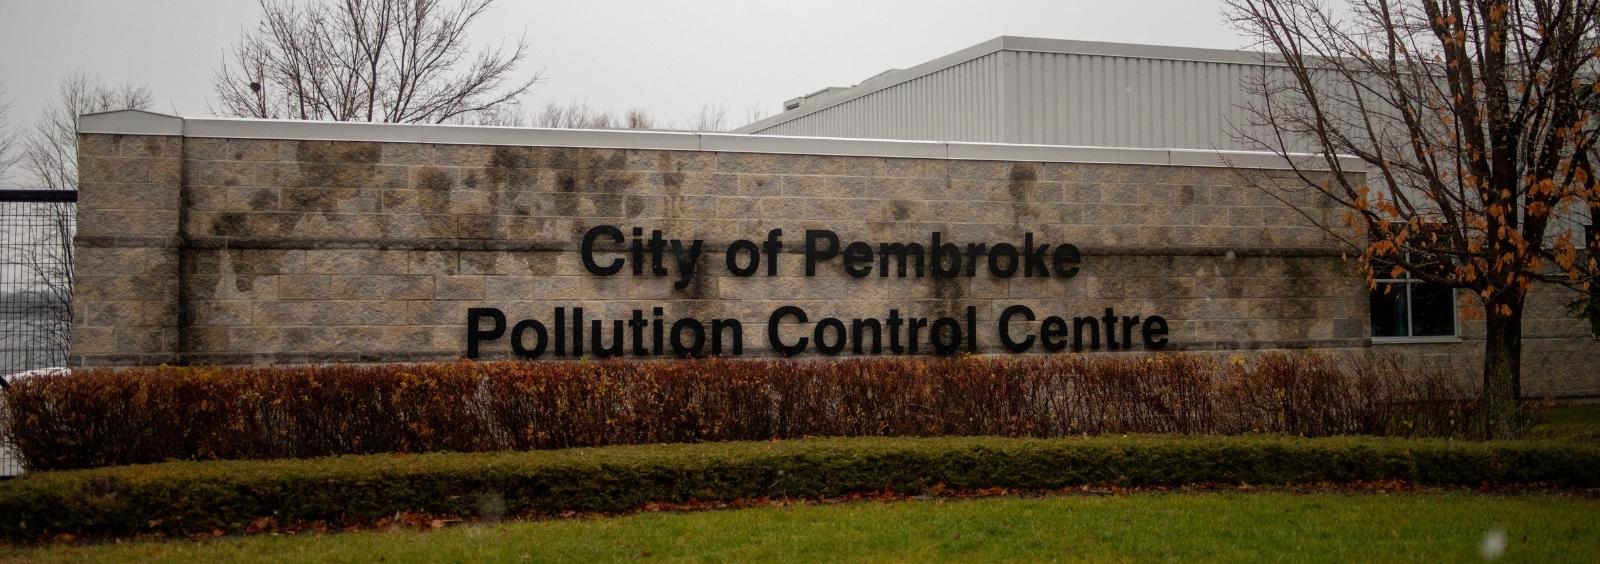 City of Pembroke Pollution Control Centre Sign.